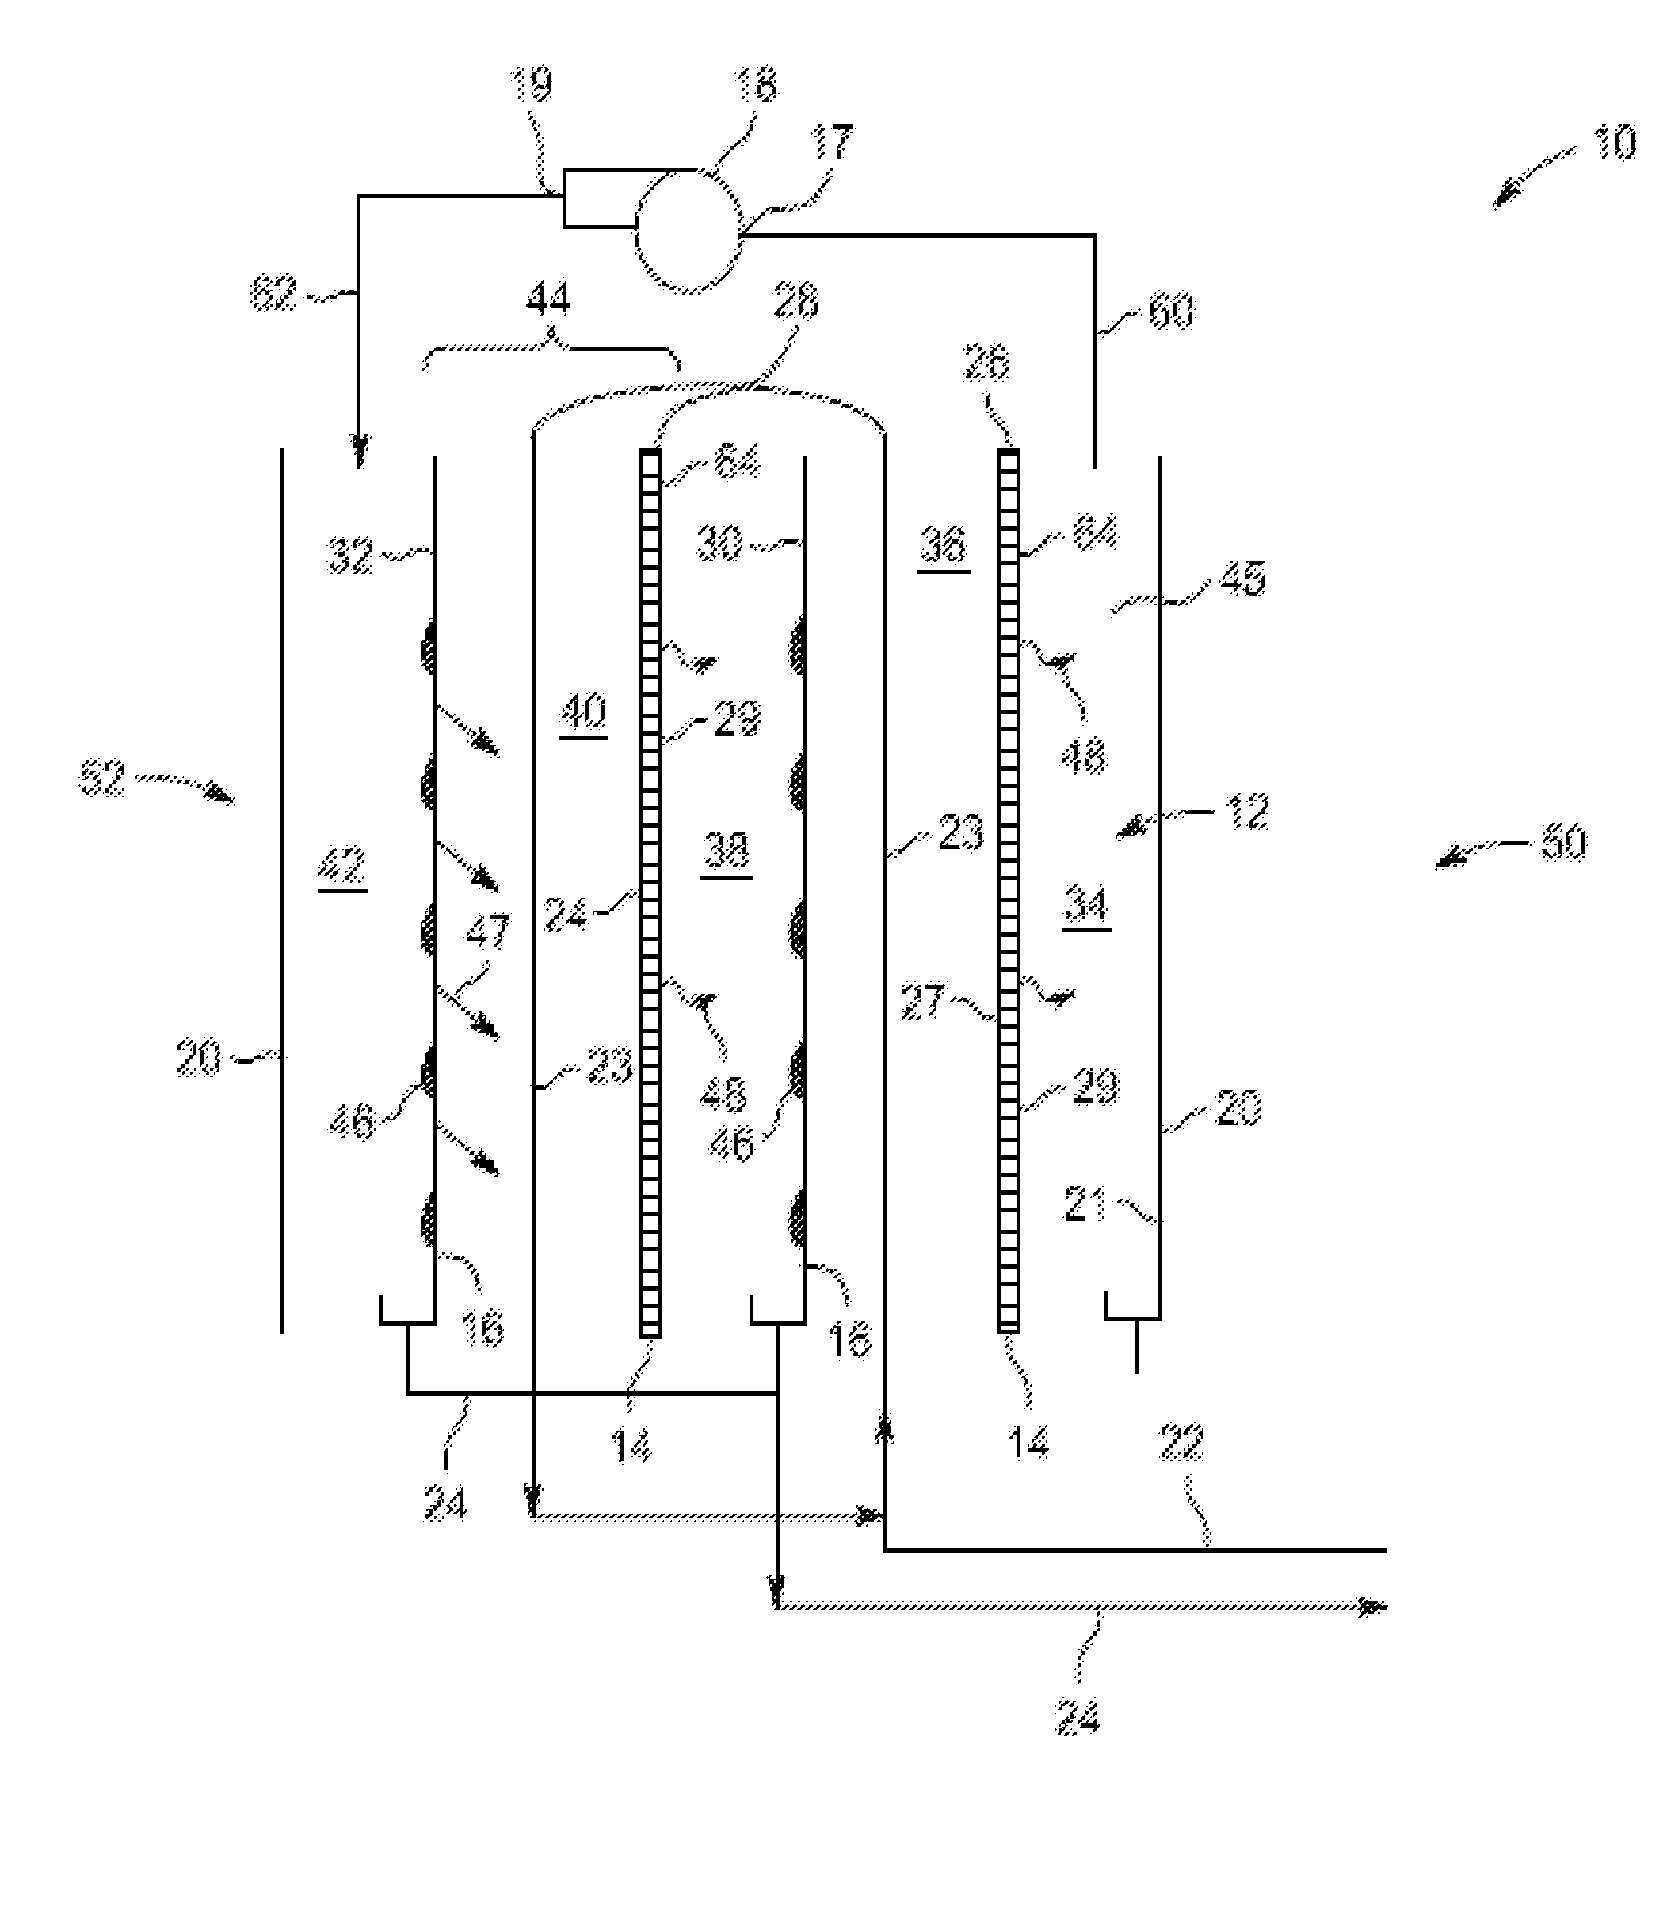 Vapor compression membrane distillation system and method